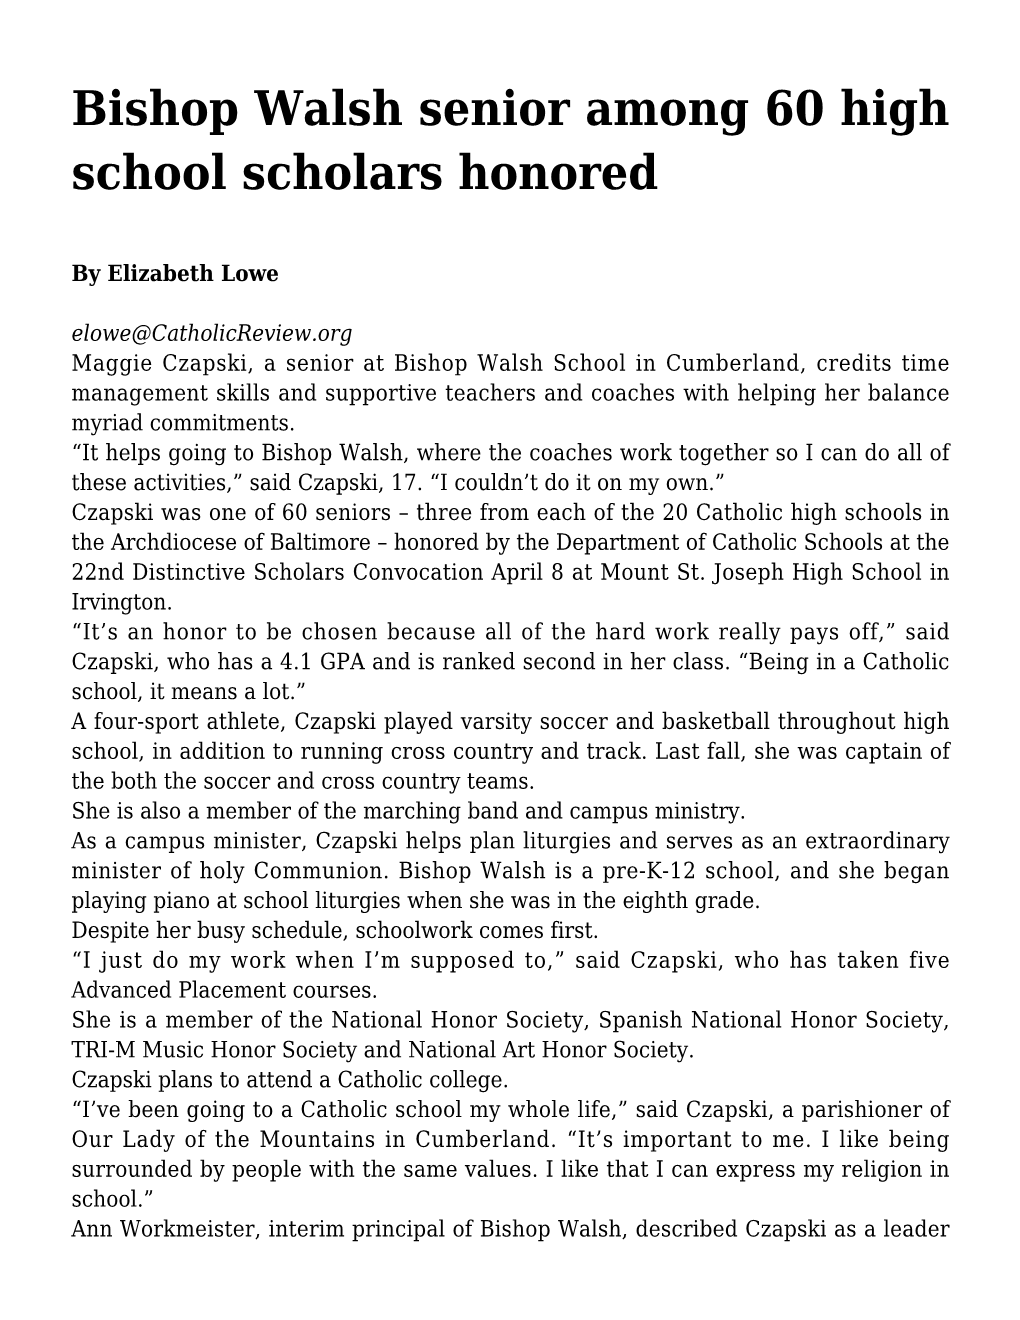 Bishop Walsh Senior Among 60 High School Scholars Honored